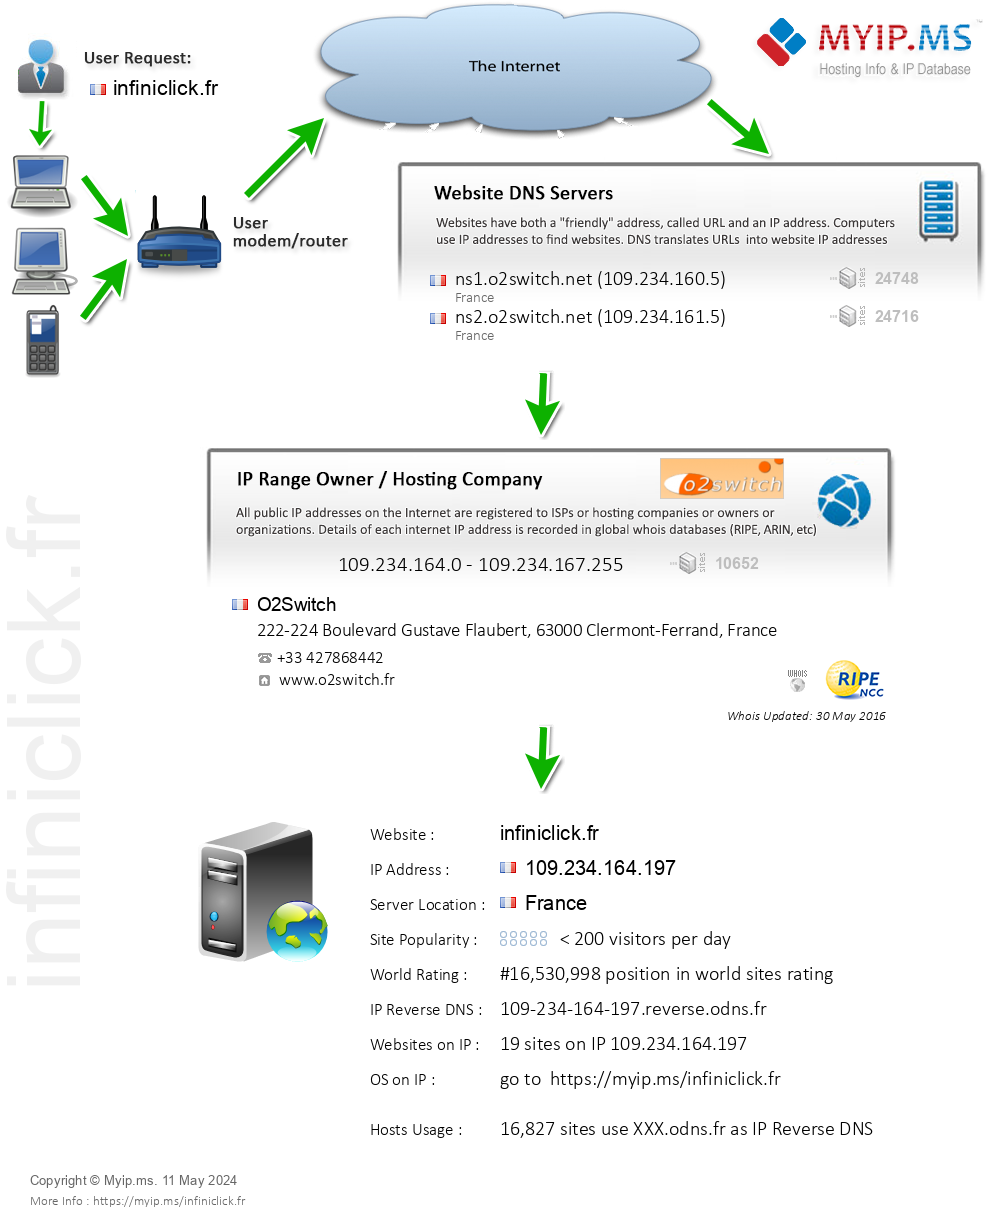 Infiniclick.fr - Website Hosting Visual IP Diagram